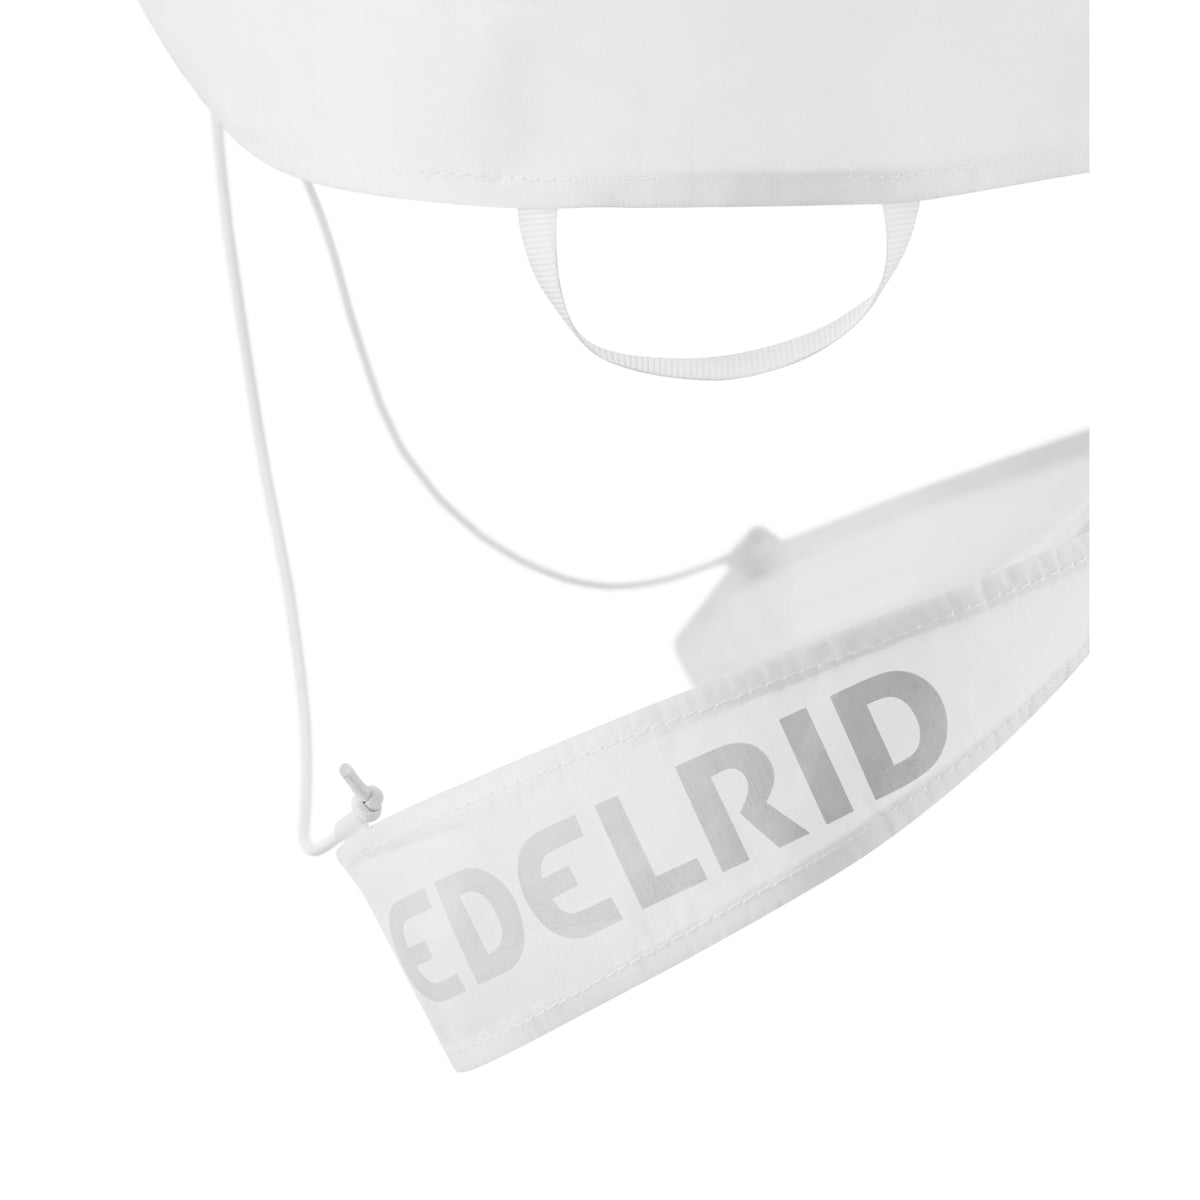 Edelrid Loopo Air Harness